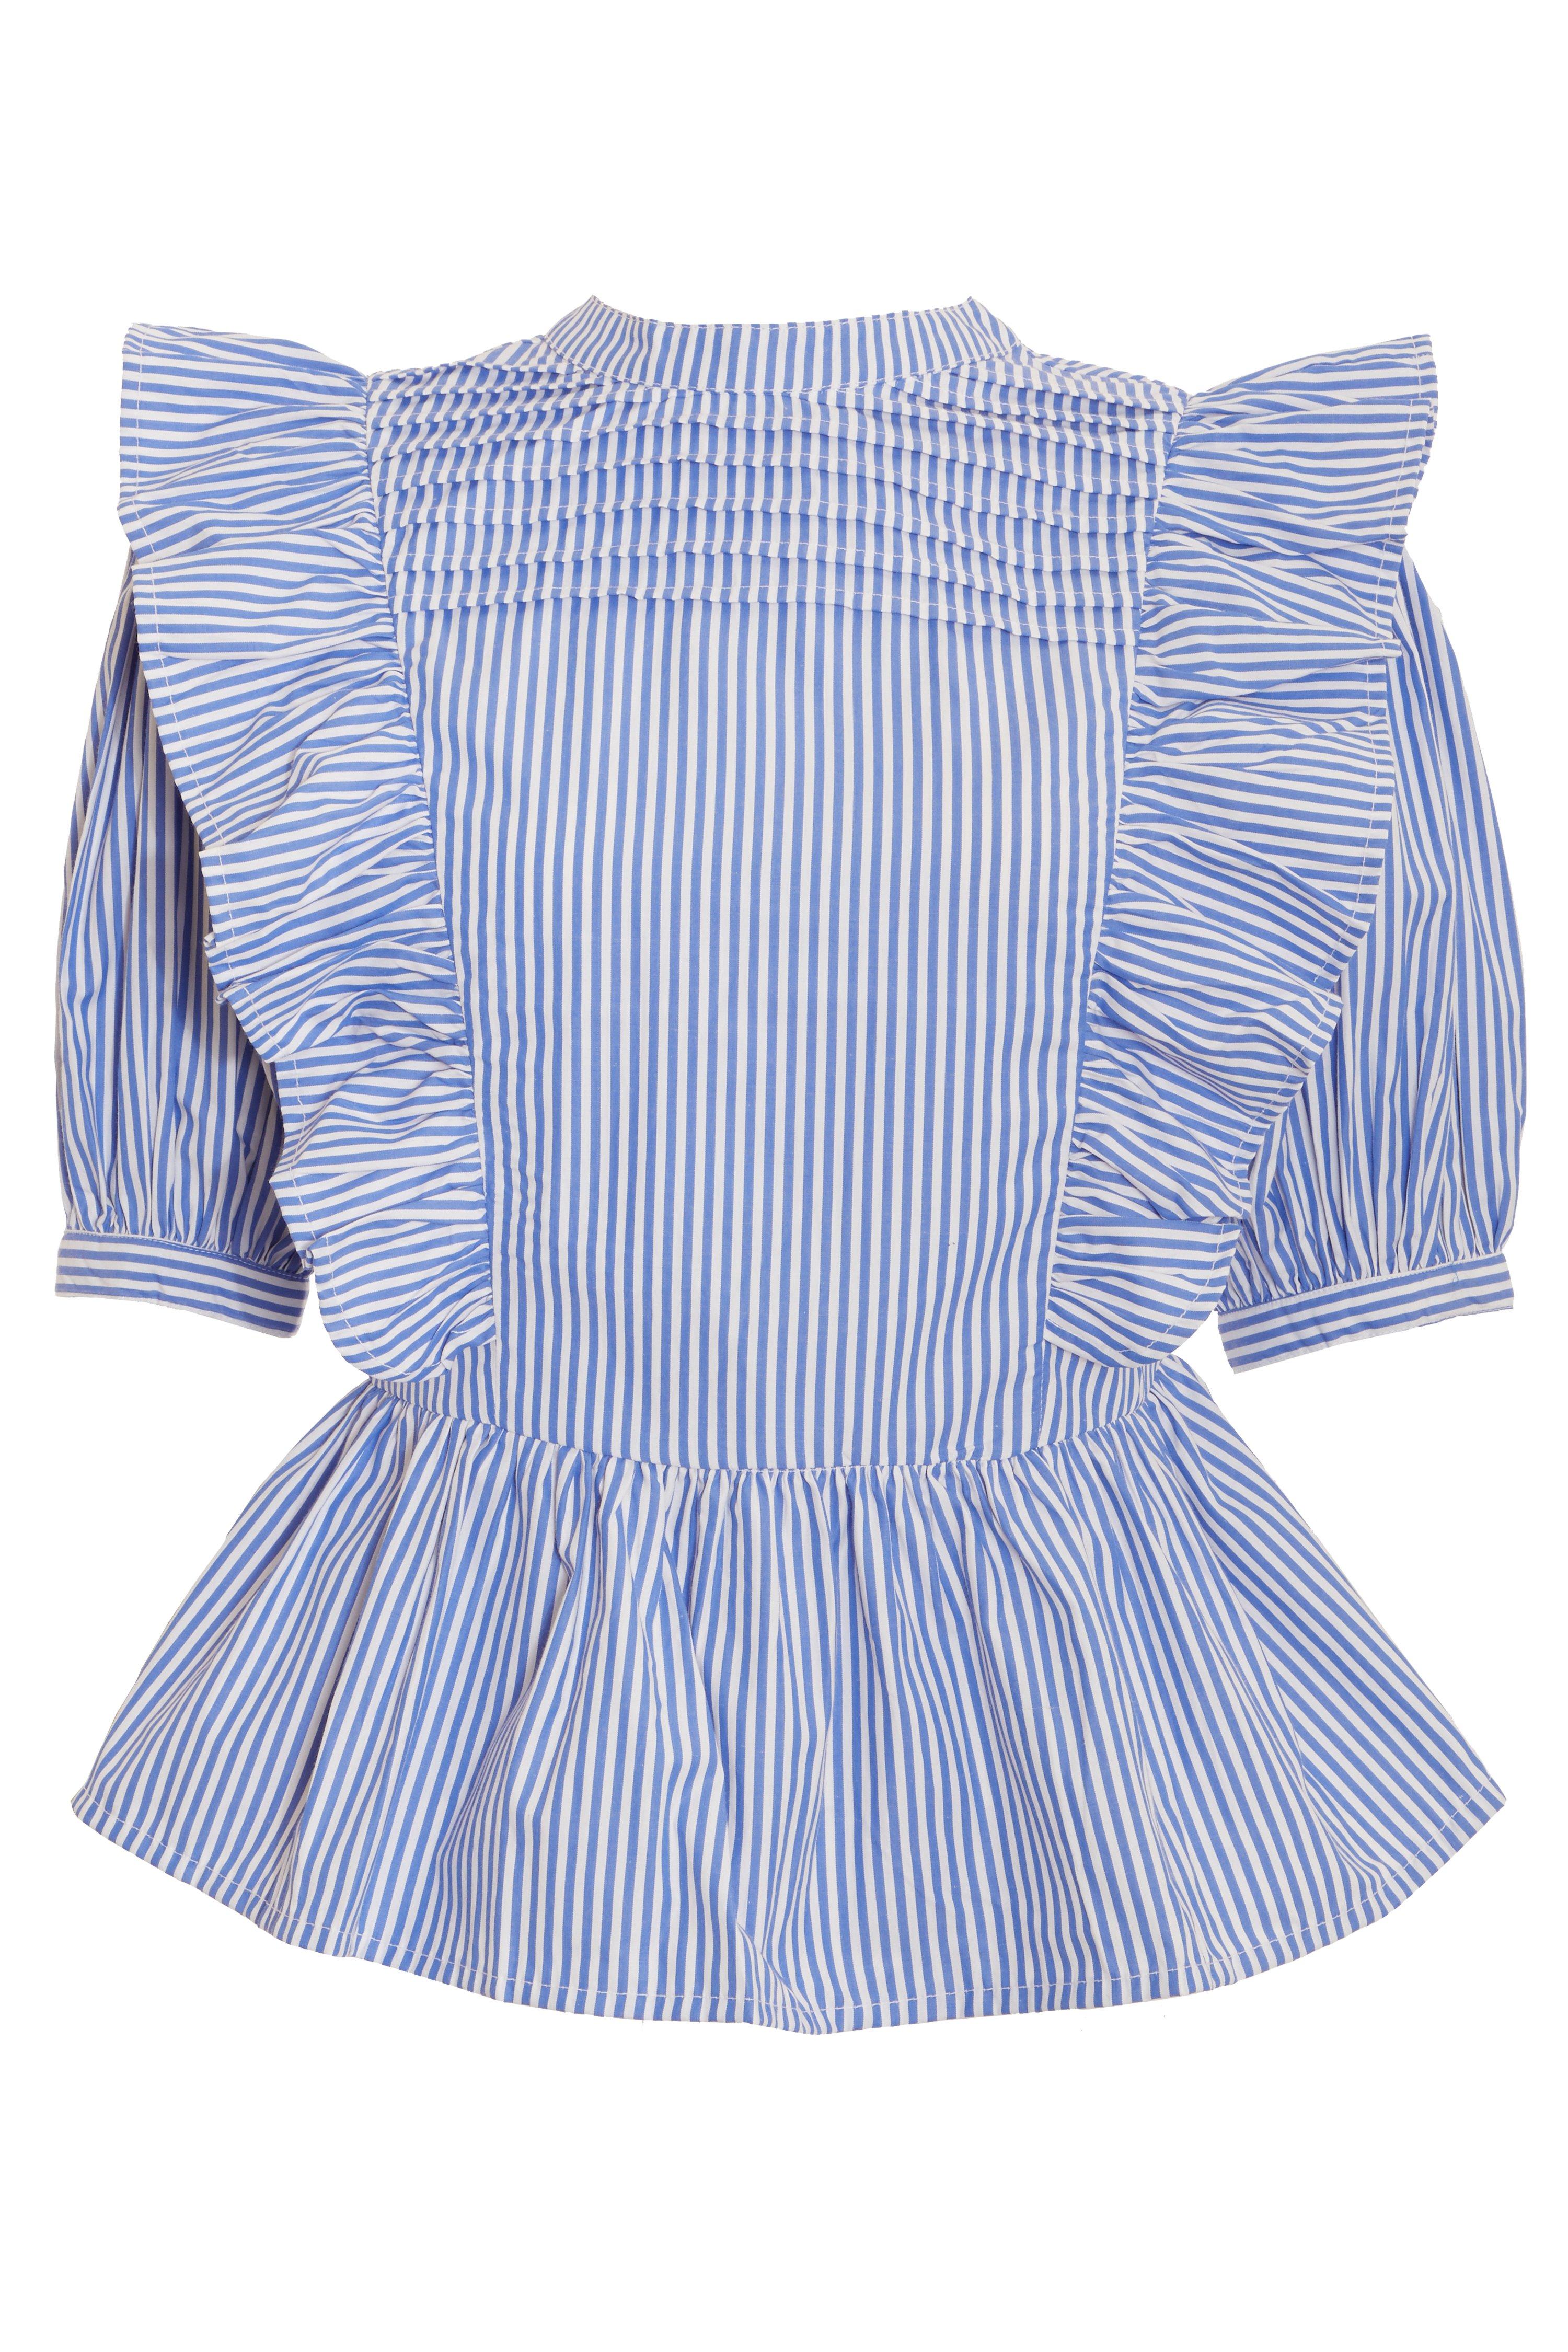 Blue & White Stripe Peplum Top - Quiz Clothing